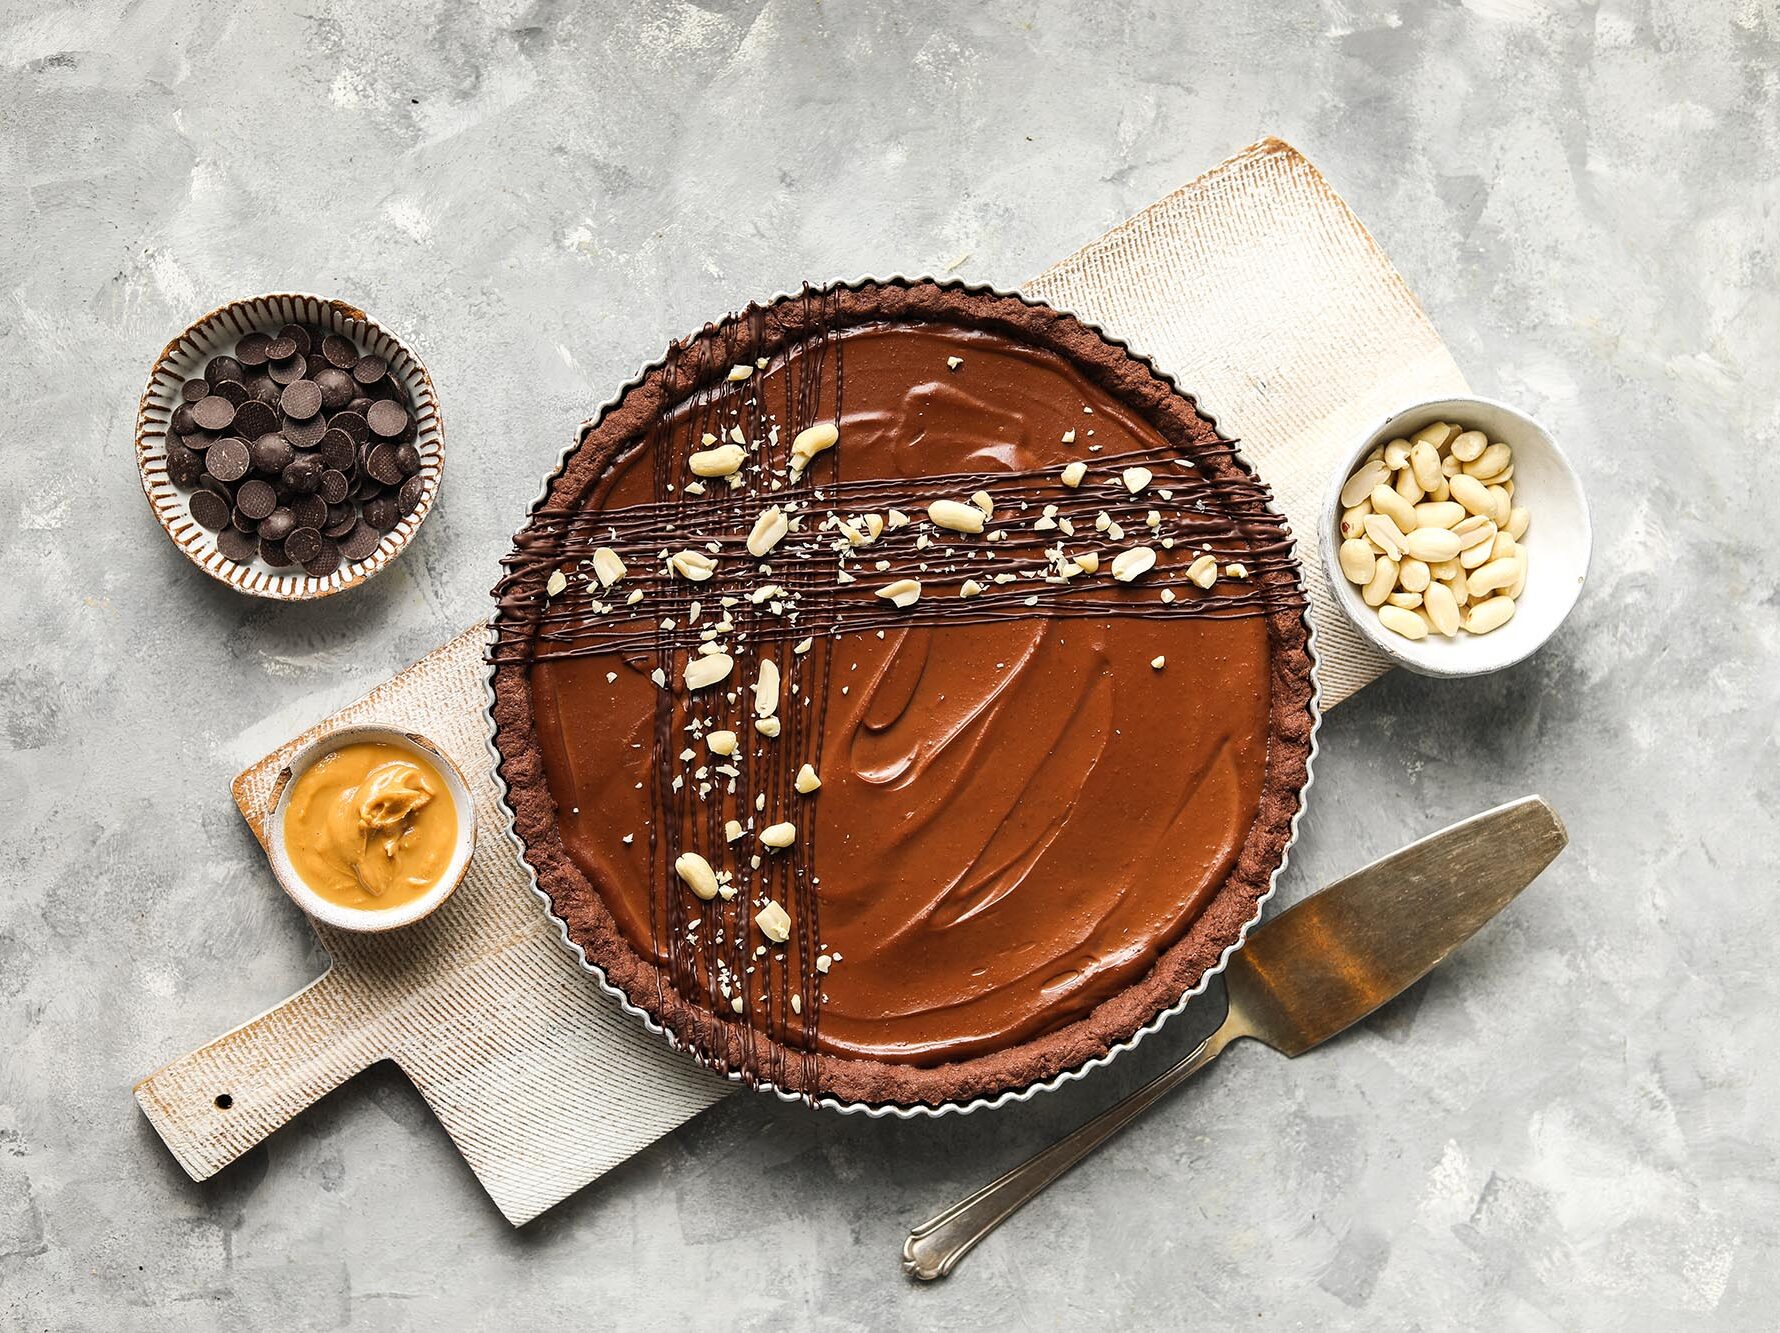 Chocolate & Peanut Butter Tart by Luce Hosier 2